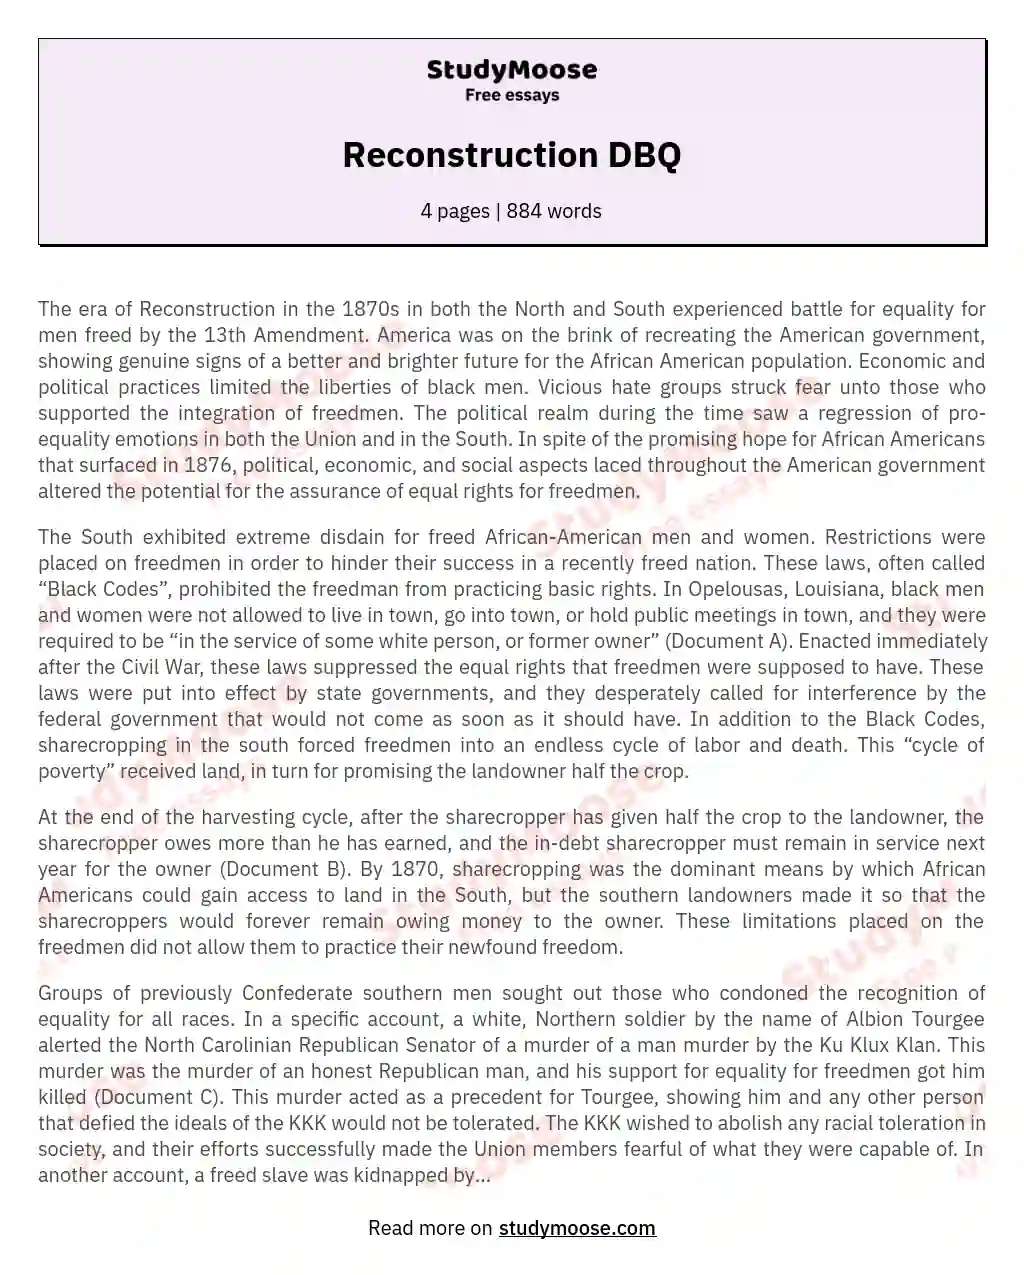 who killed reconstruction dbq essay